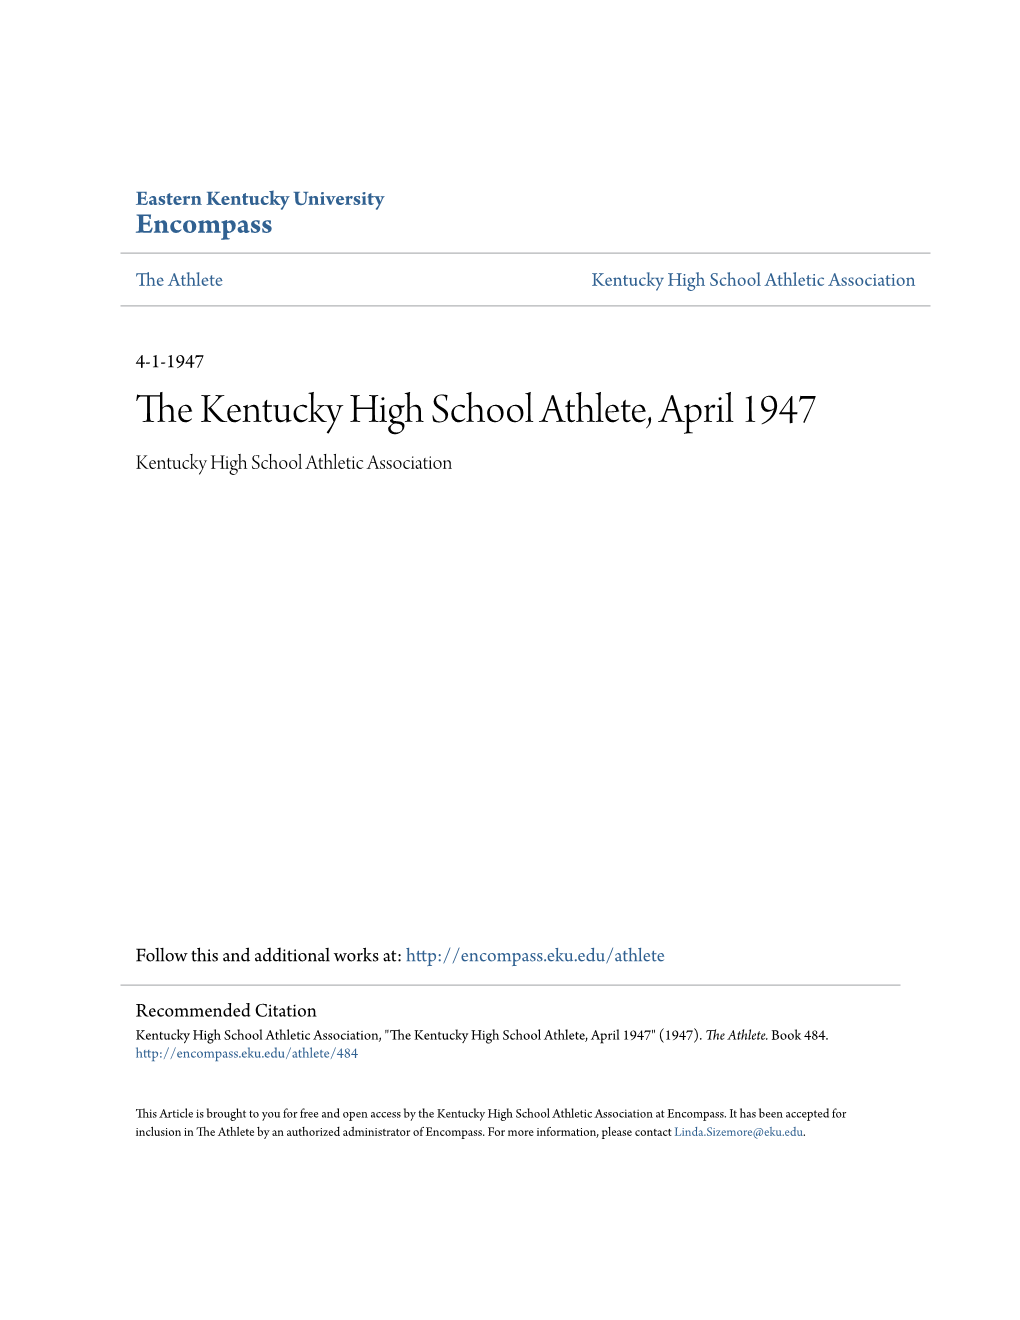 The Kentucky High School Athlete, April 1947 Kentucky High School Athletic Association